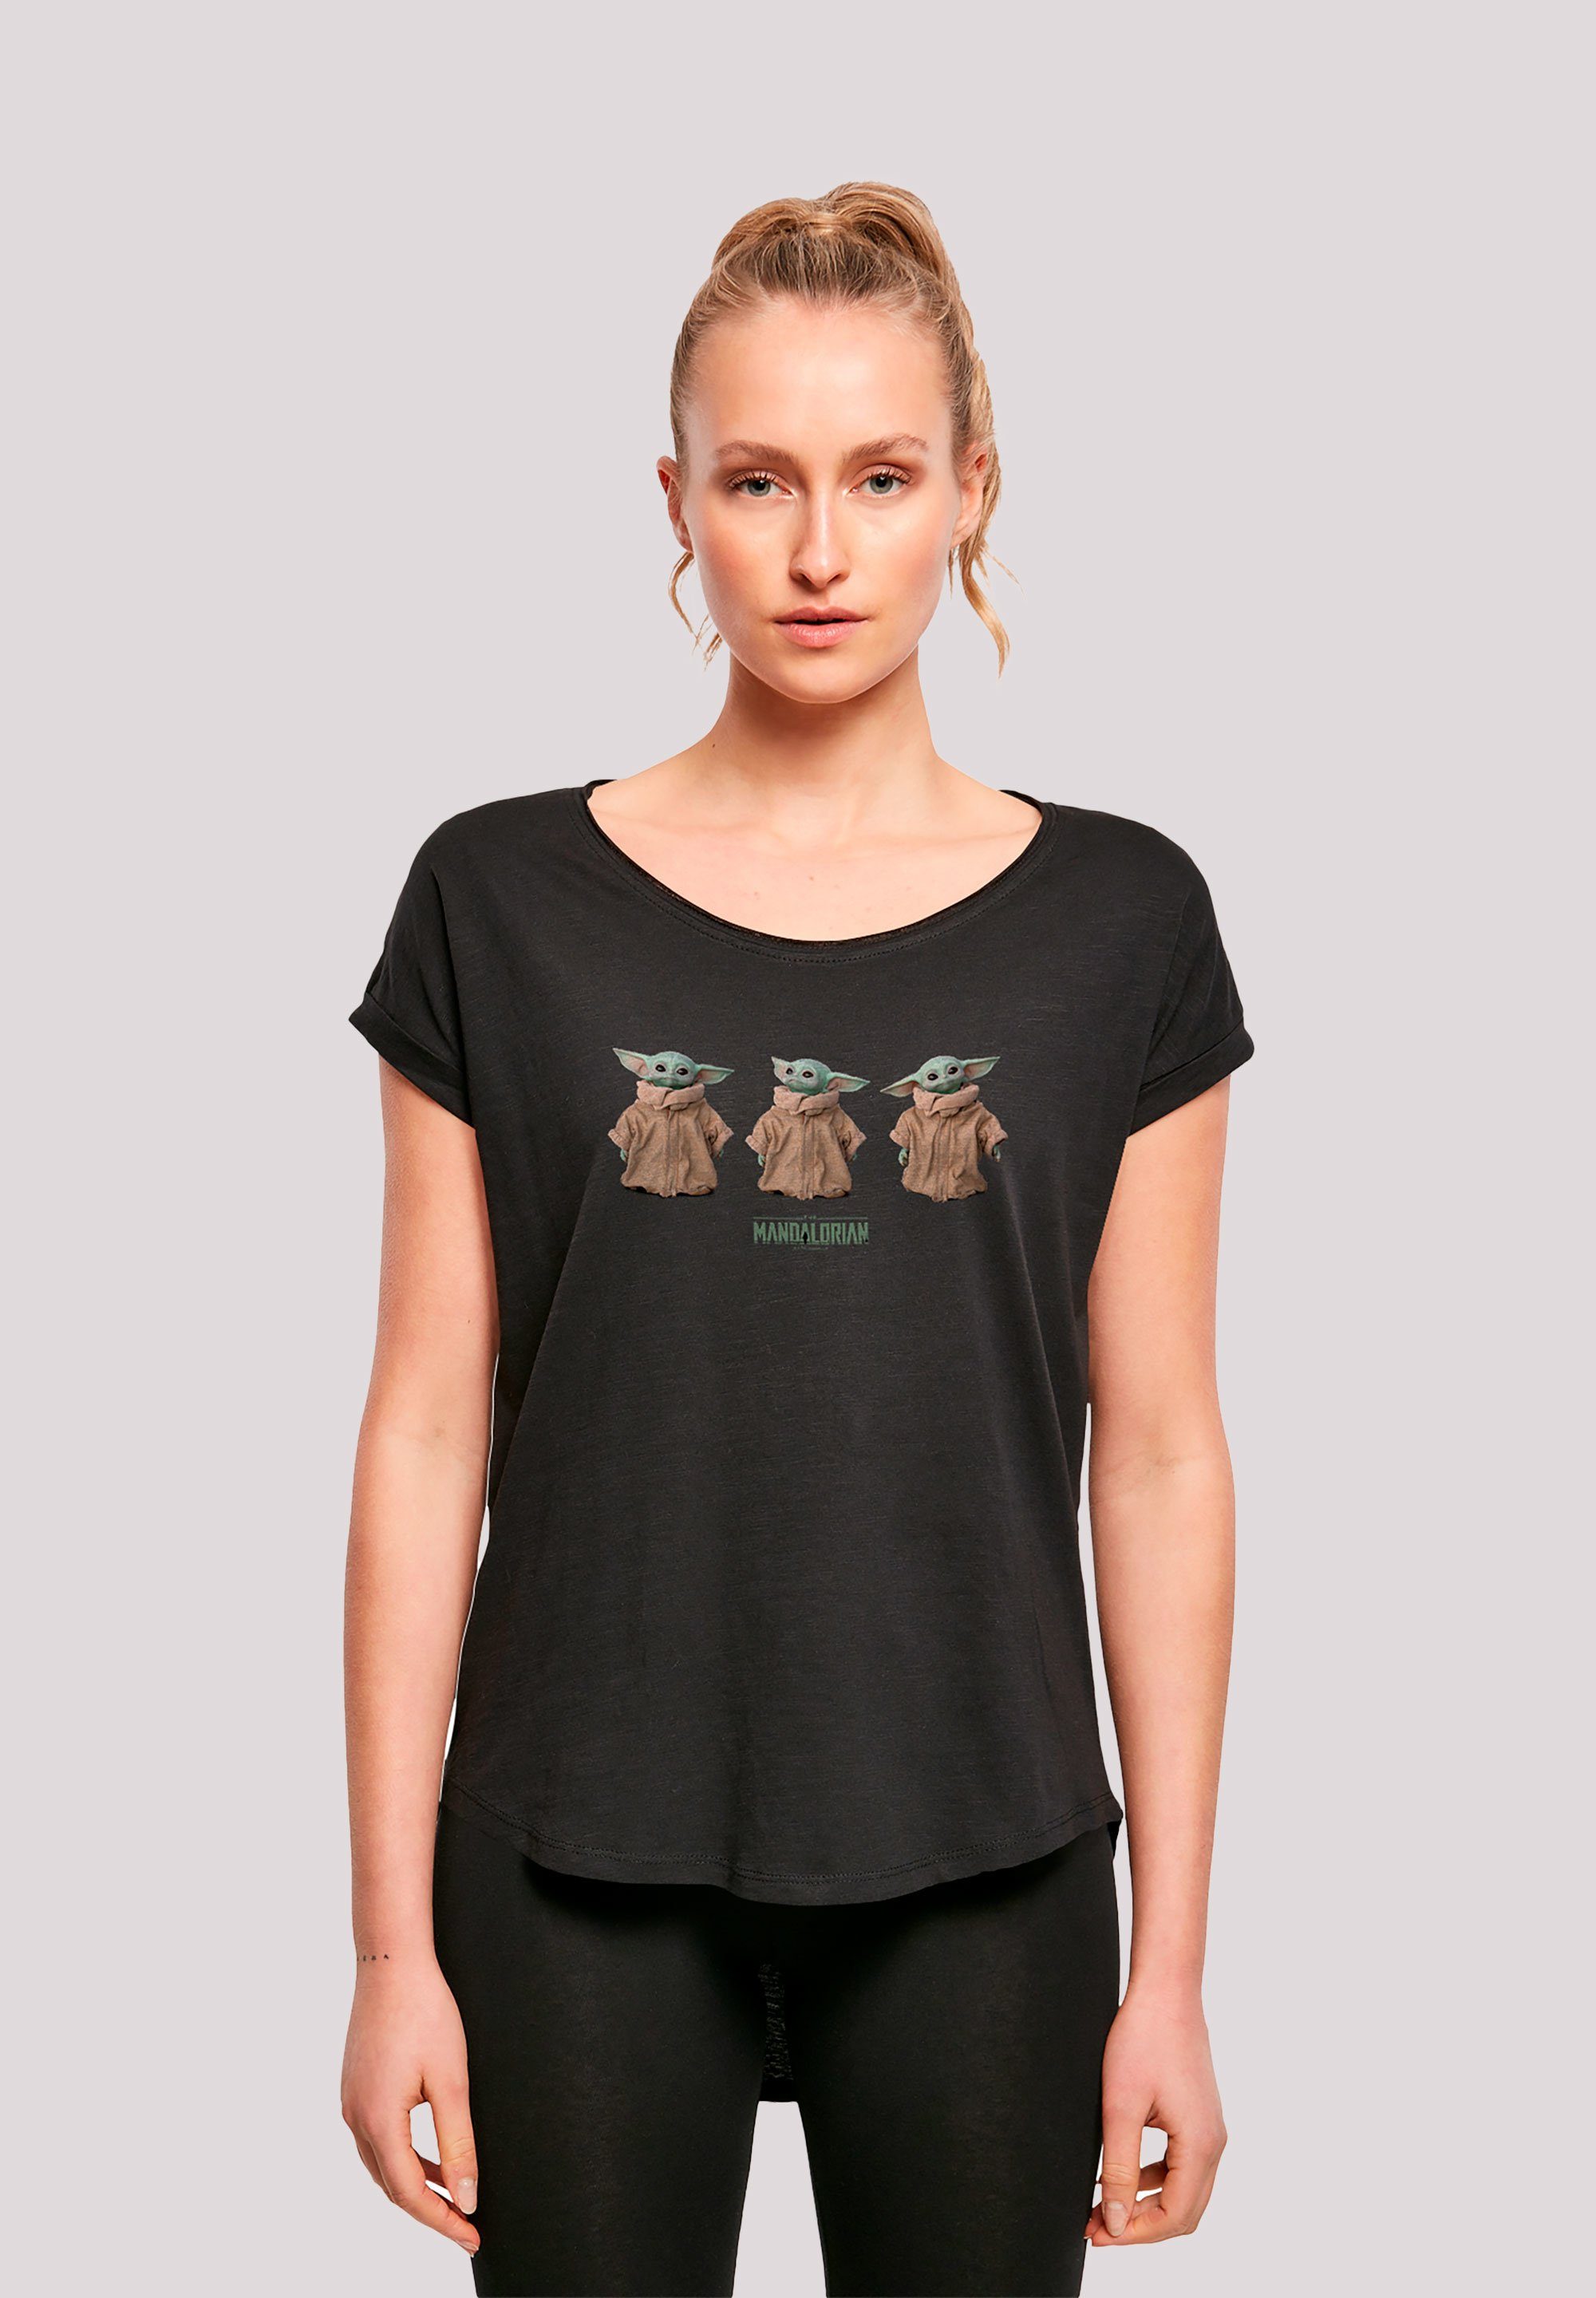 Premium schwarz Damen,Premium Fan T-Shirt Yoda Mandalorian Star - The Baby F4NT4STIC Merch Wars Merch,Lang,Longshirt,Bedruckt